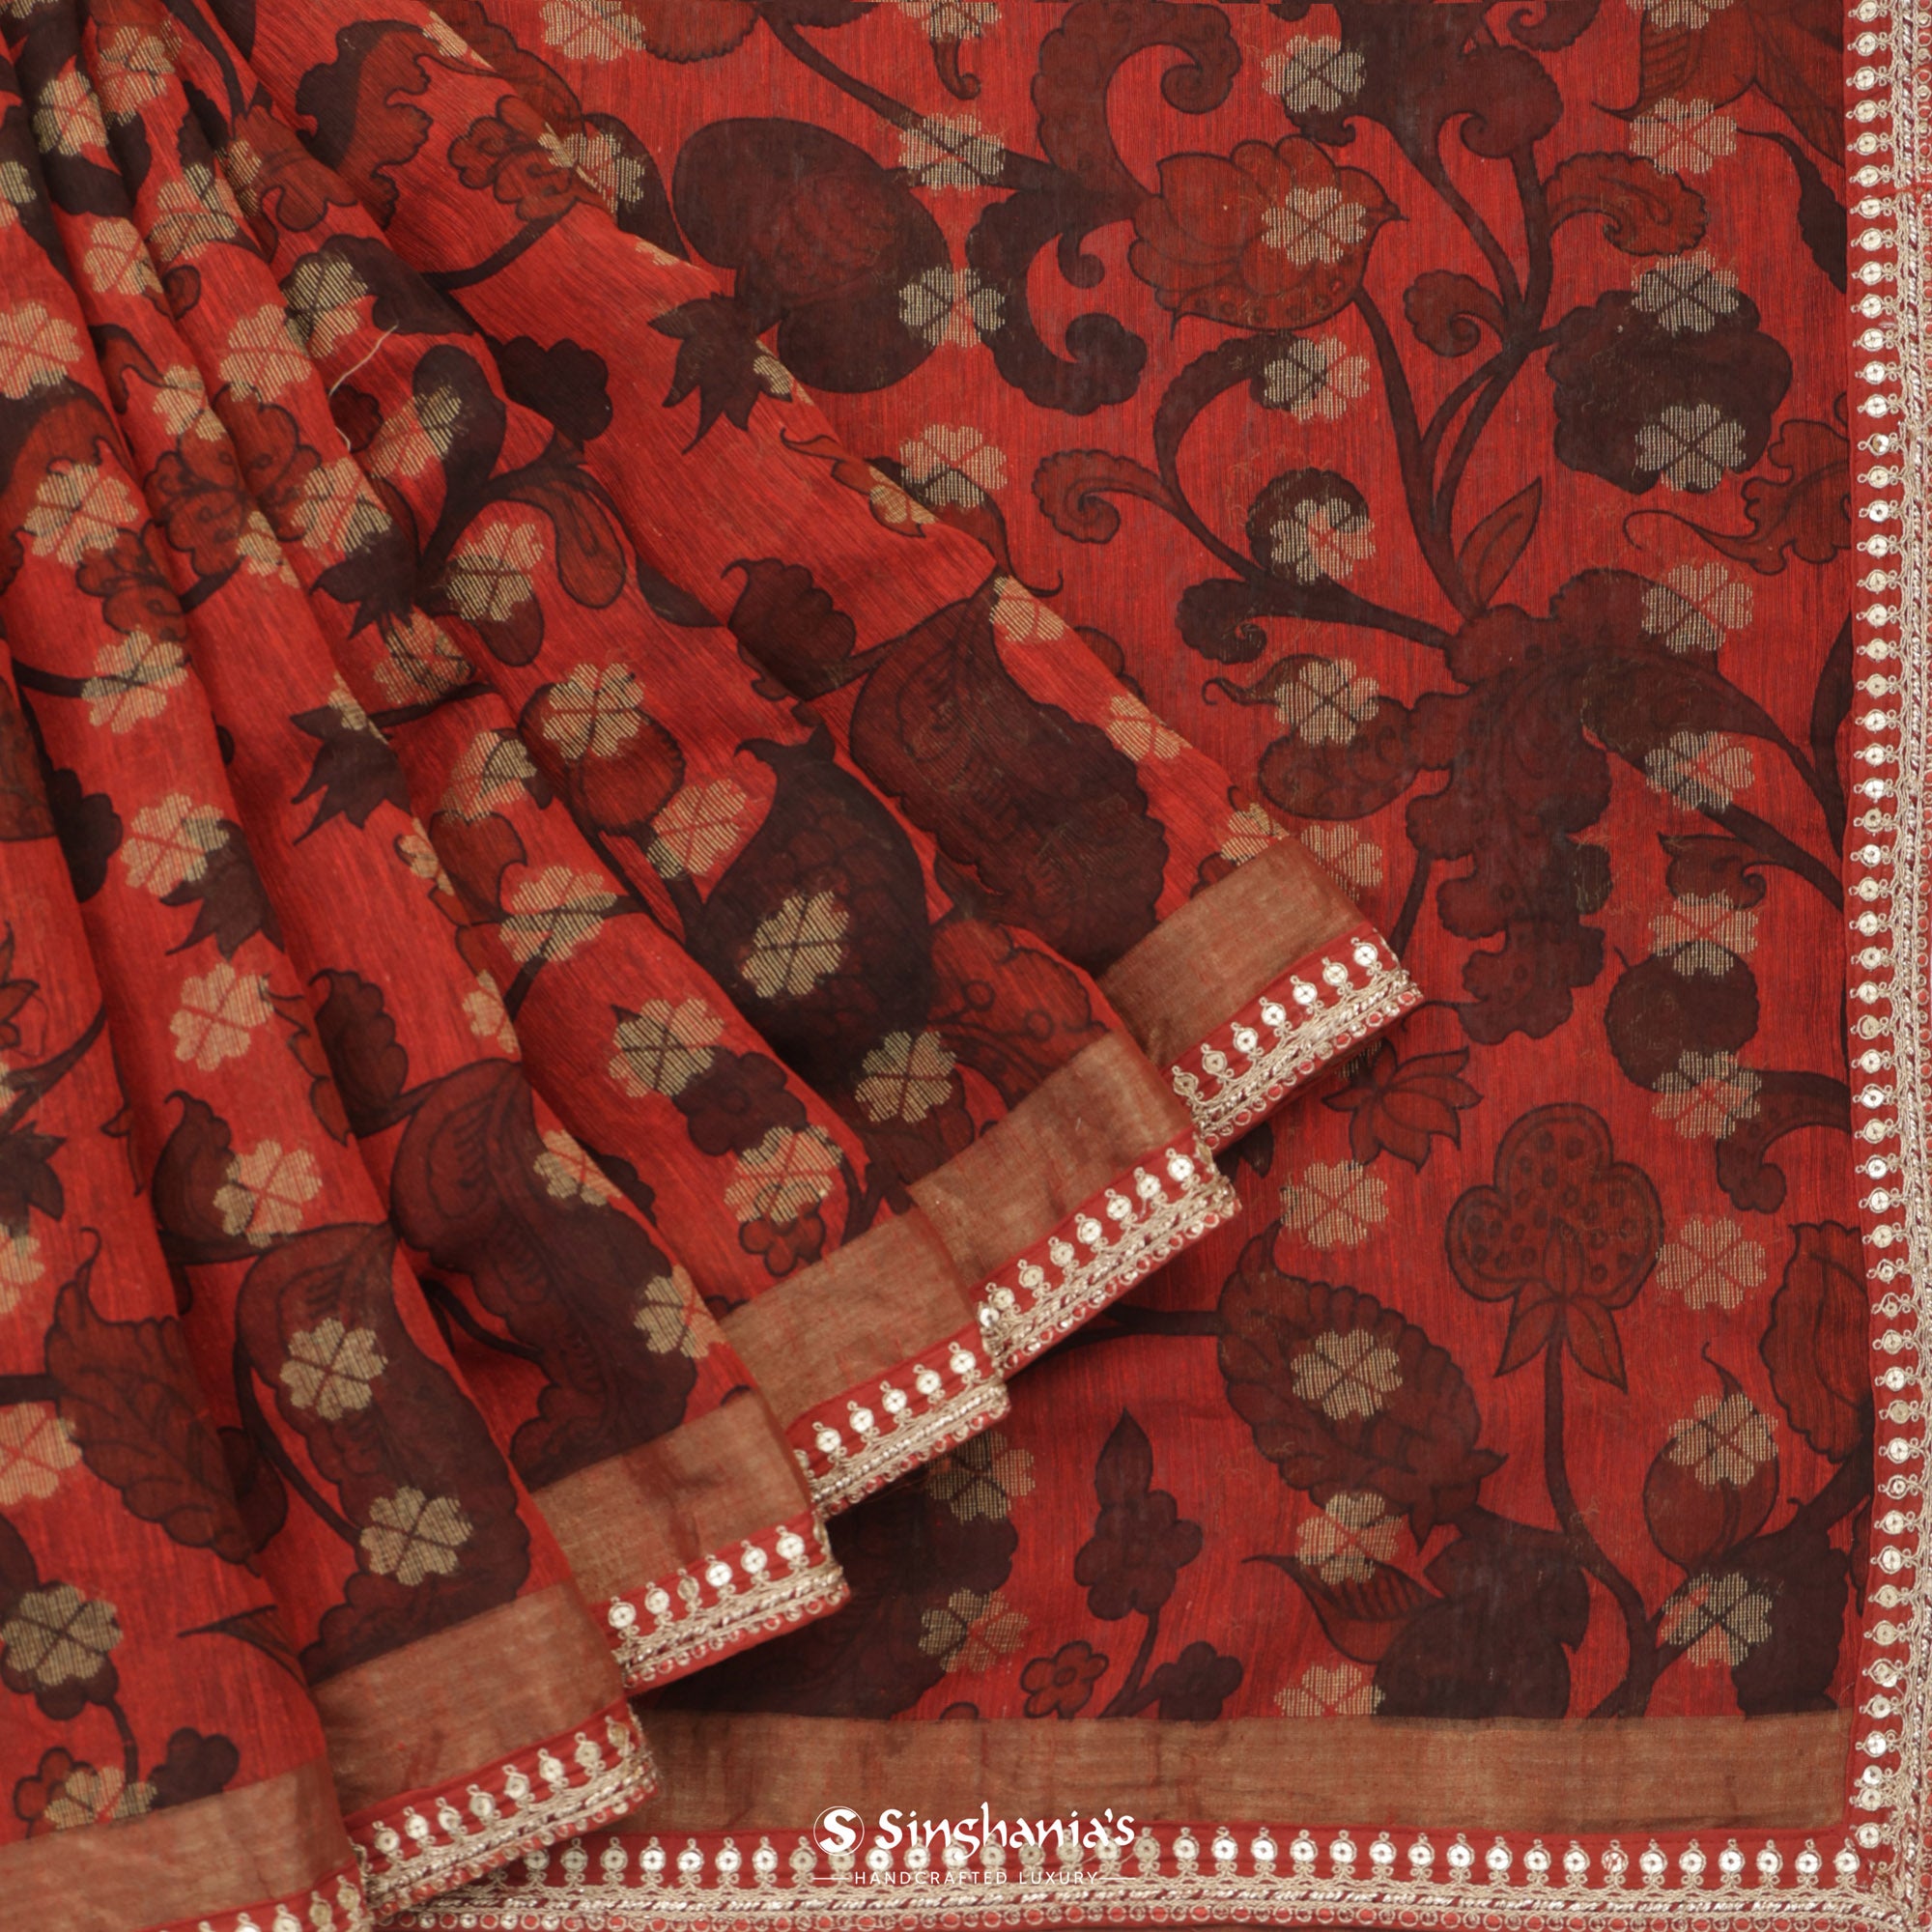 Chinese Orange Matka Silk Saree With Printed Floral Pattern